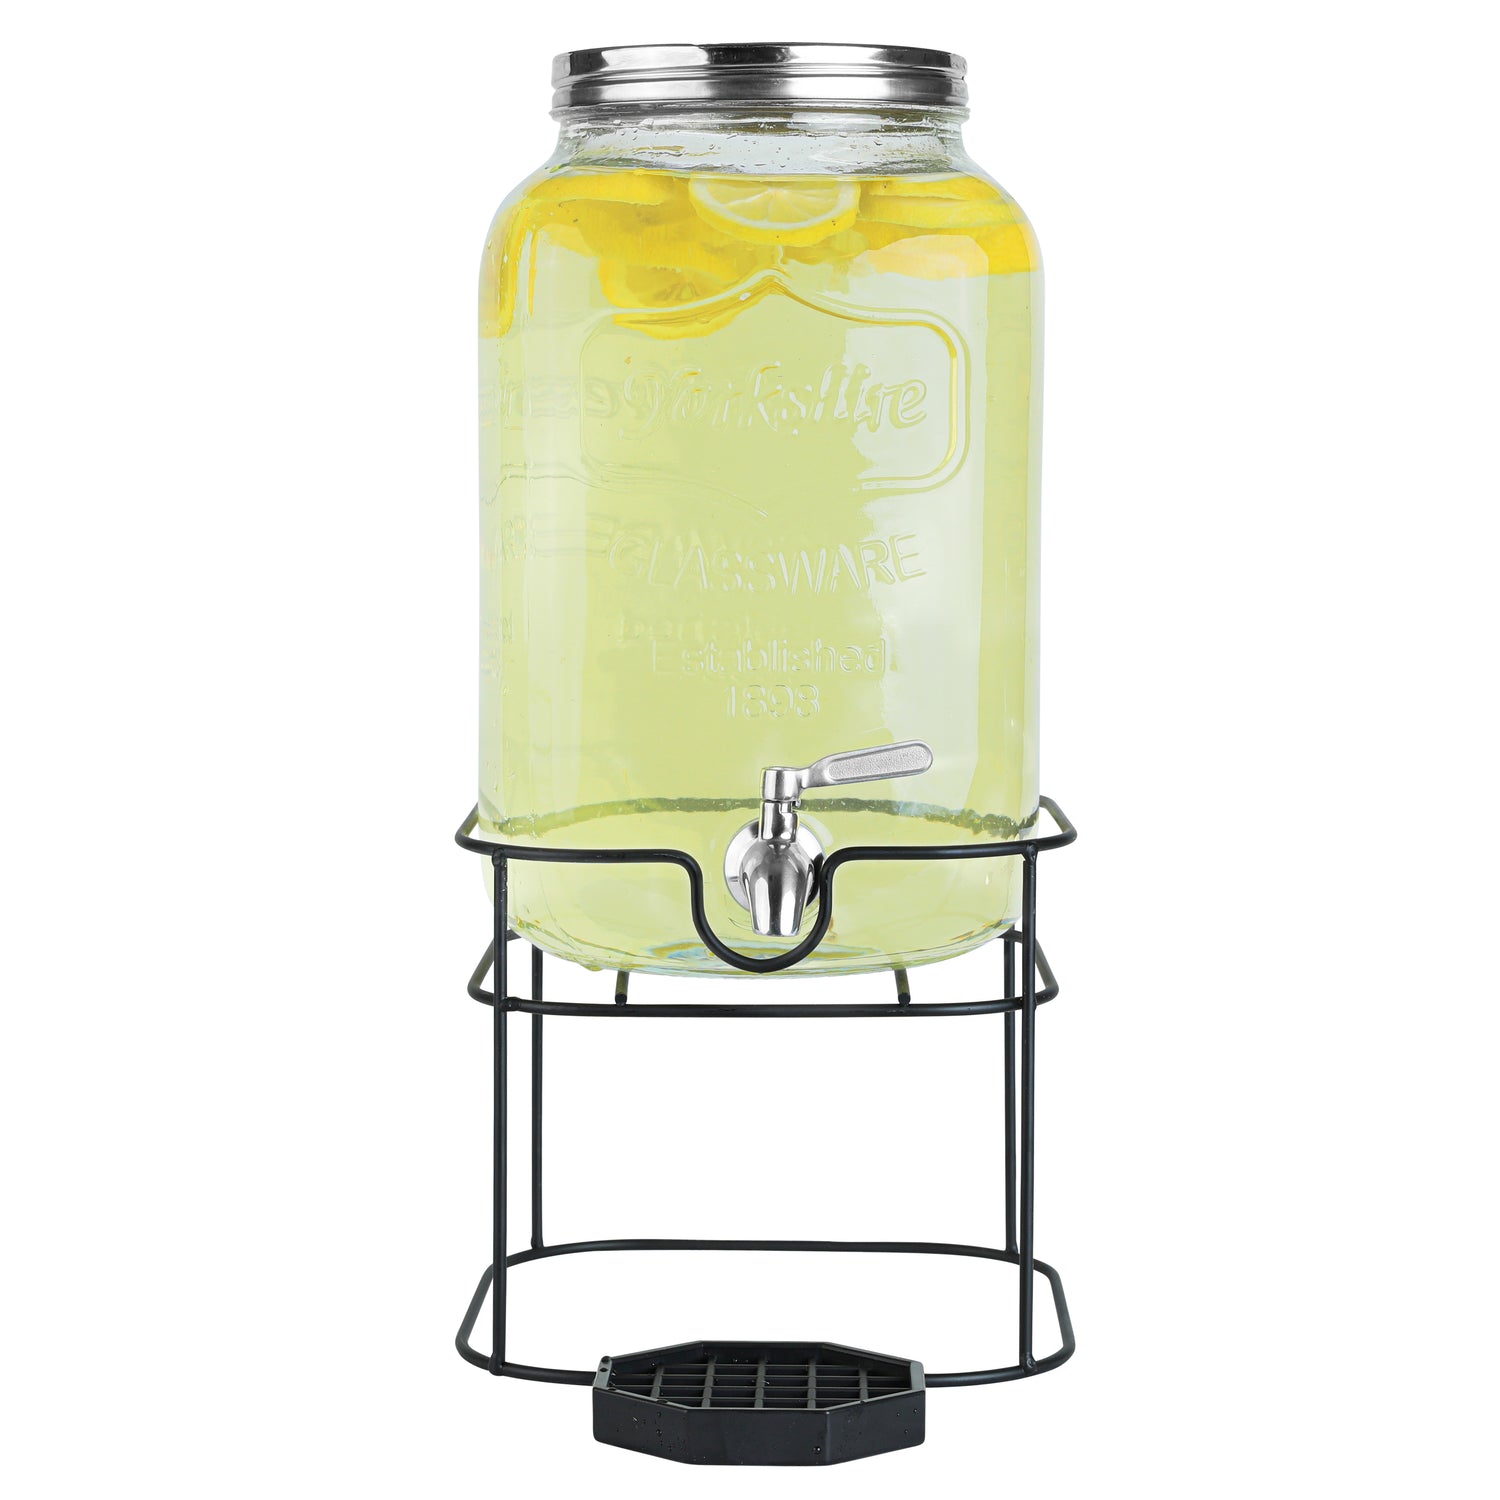 Mason Jar 2-Gallon Beverage Dispenser